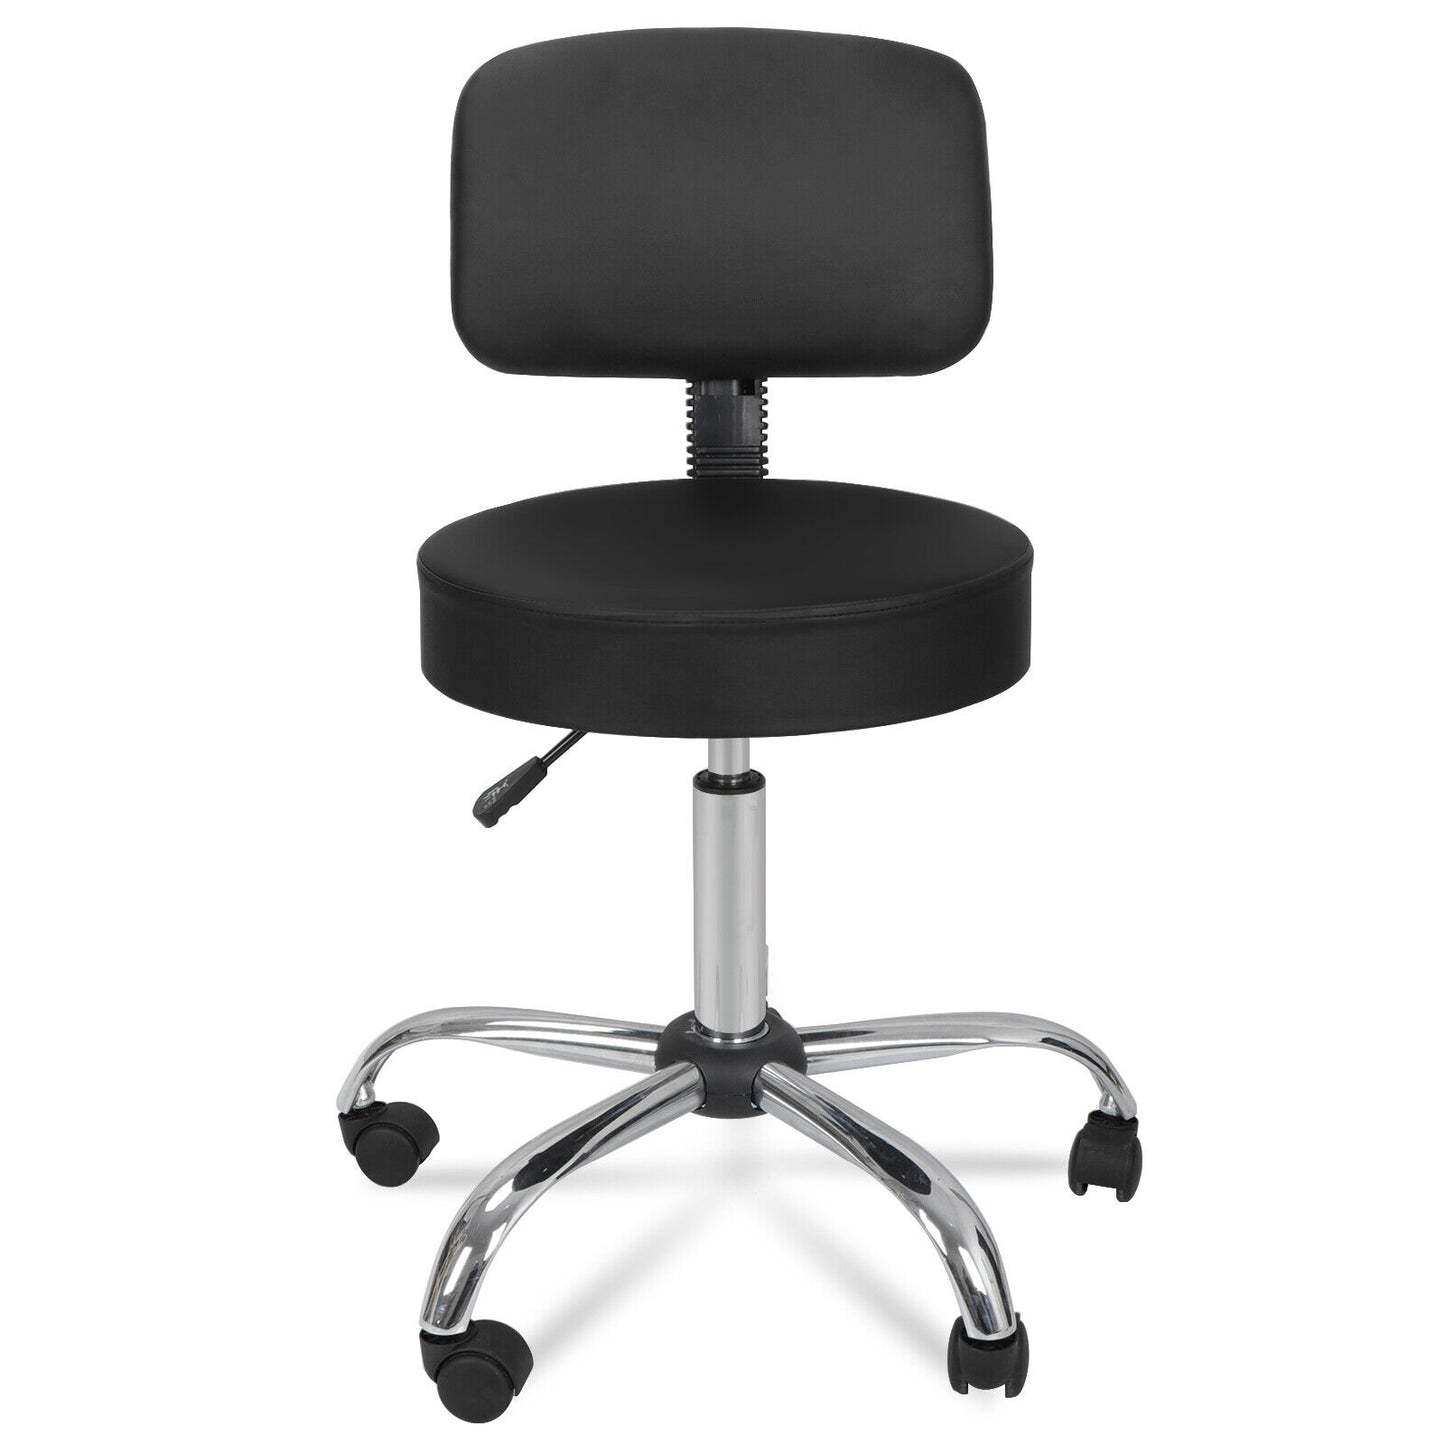 Adjustable Hydraulic Rolling Swivel Massage Spa Salon Stool Chair w/Back Rest